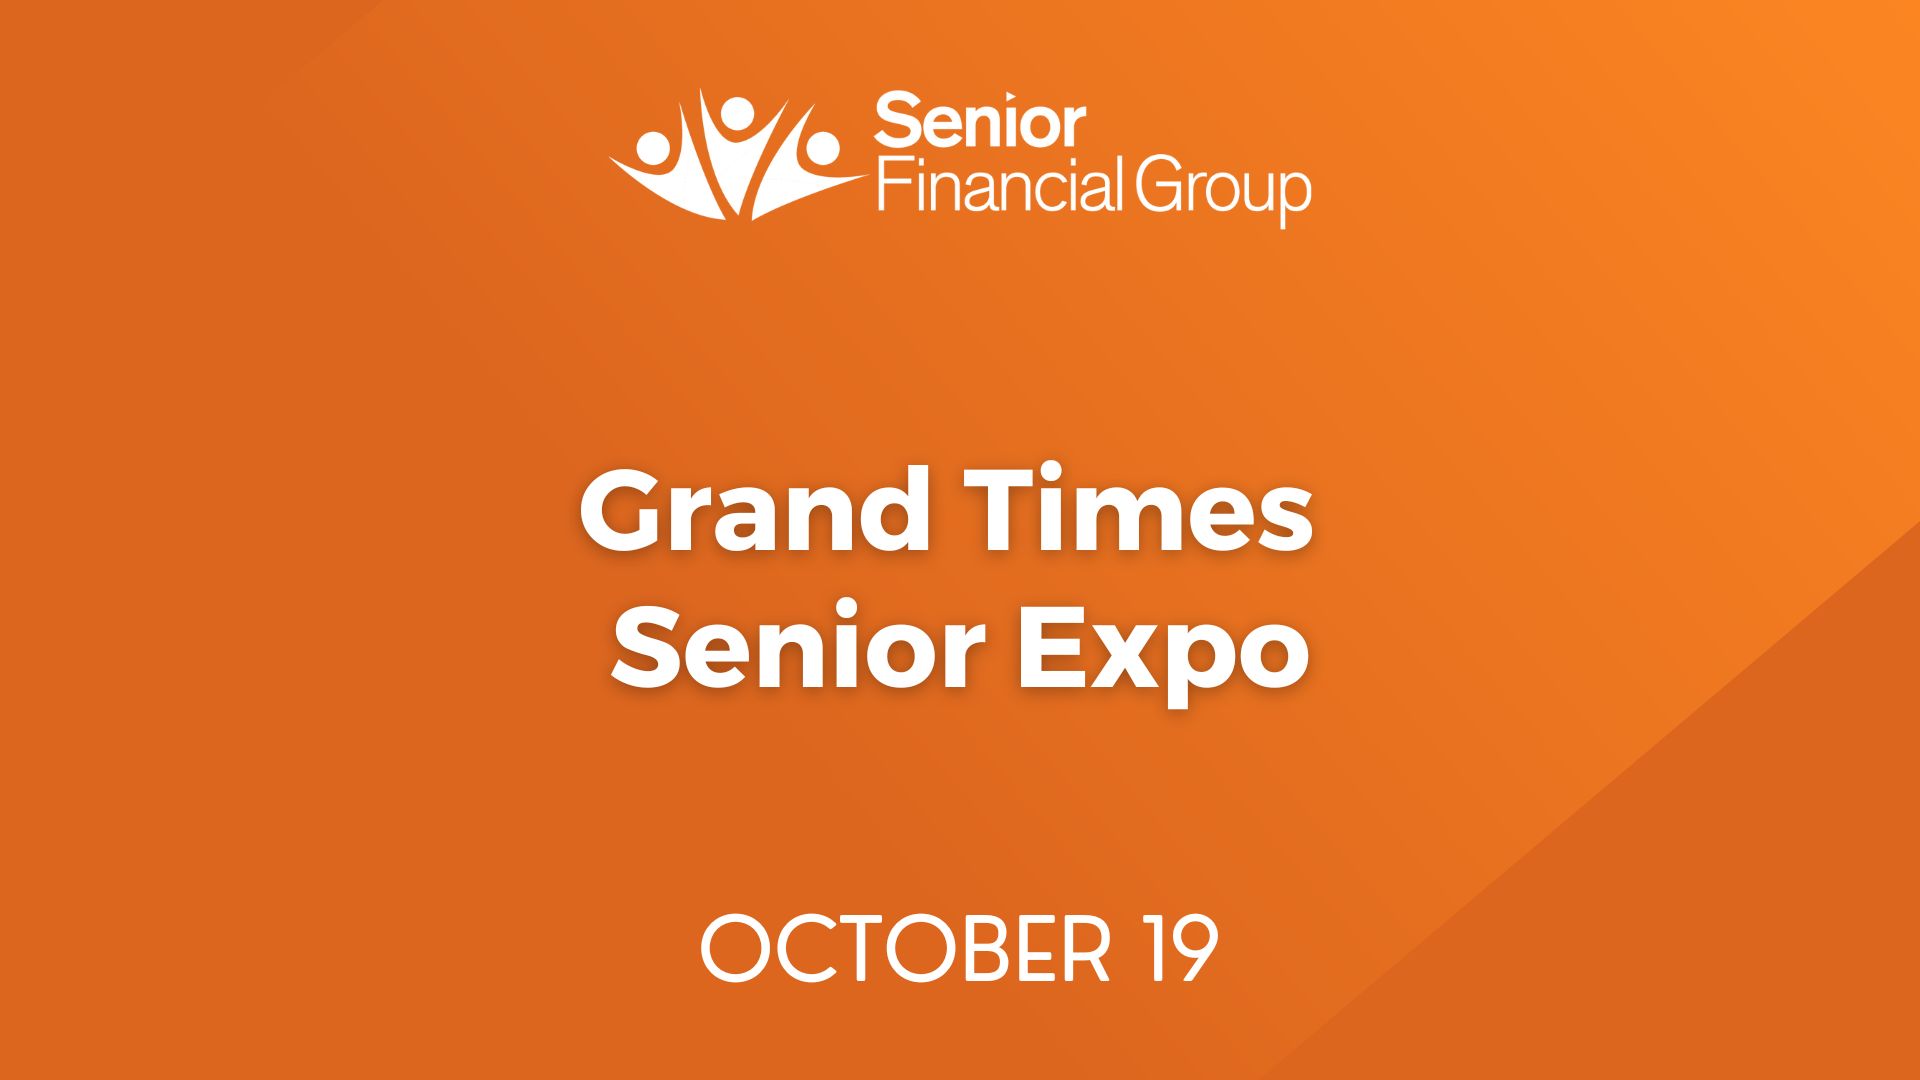 Grand Times Senior Expo